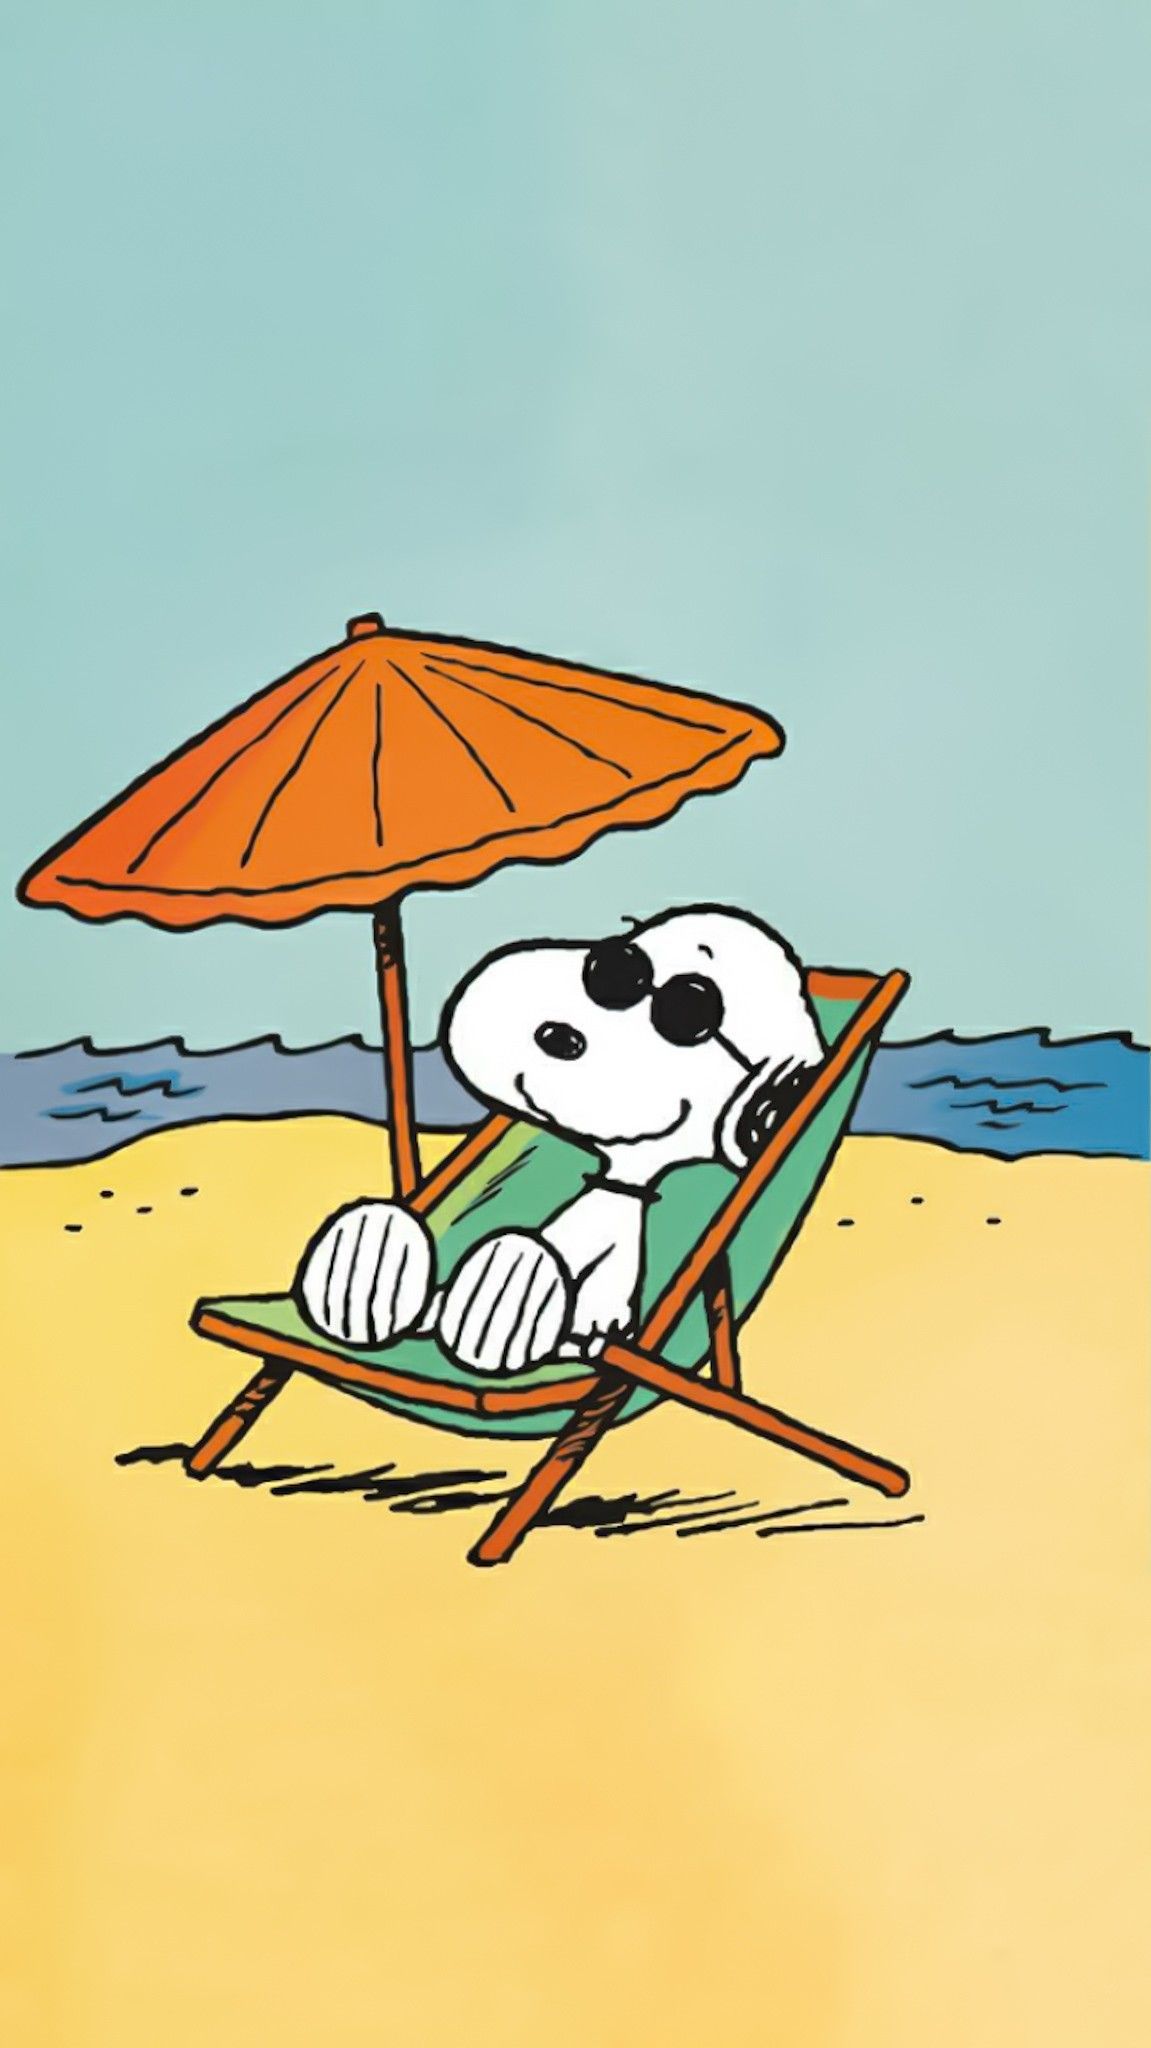 A cartoon of a dog sitting on a beach chair under an umbrella - Charlie Brown